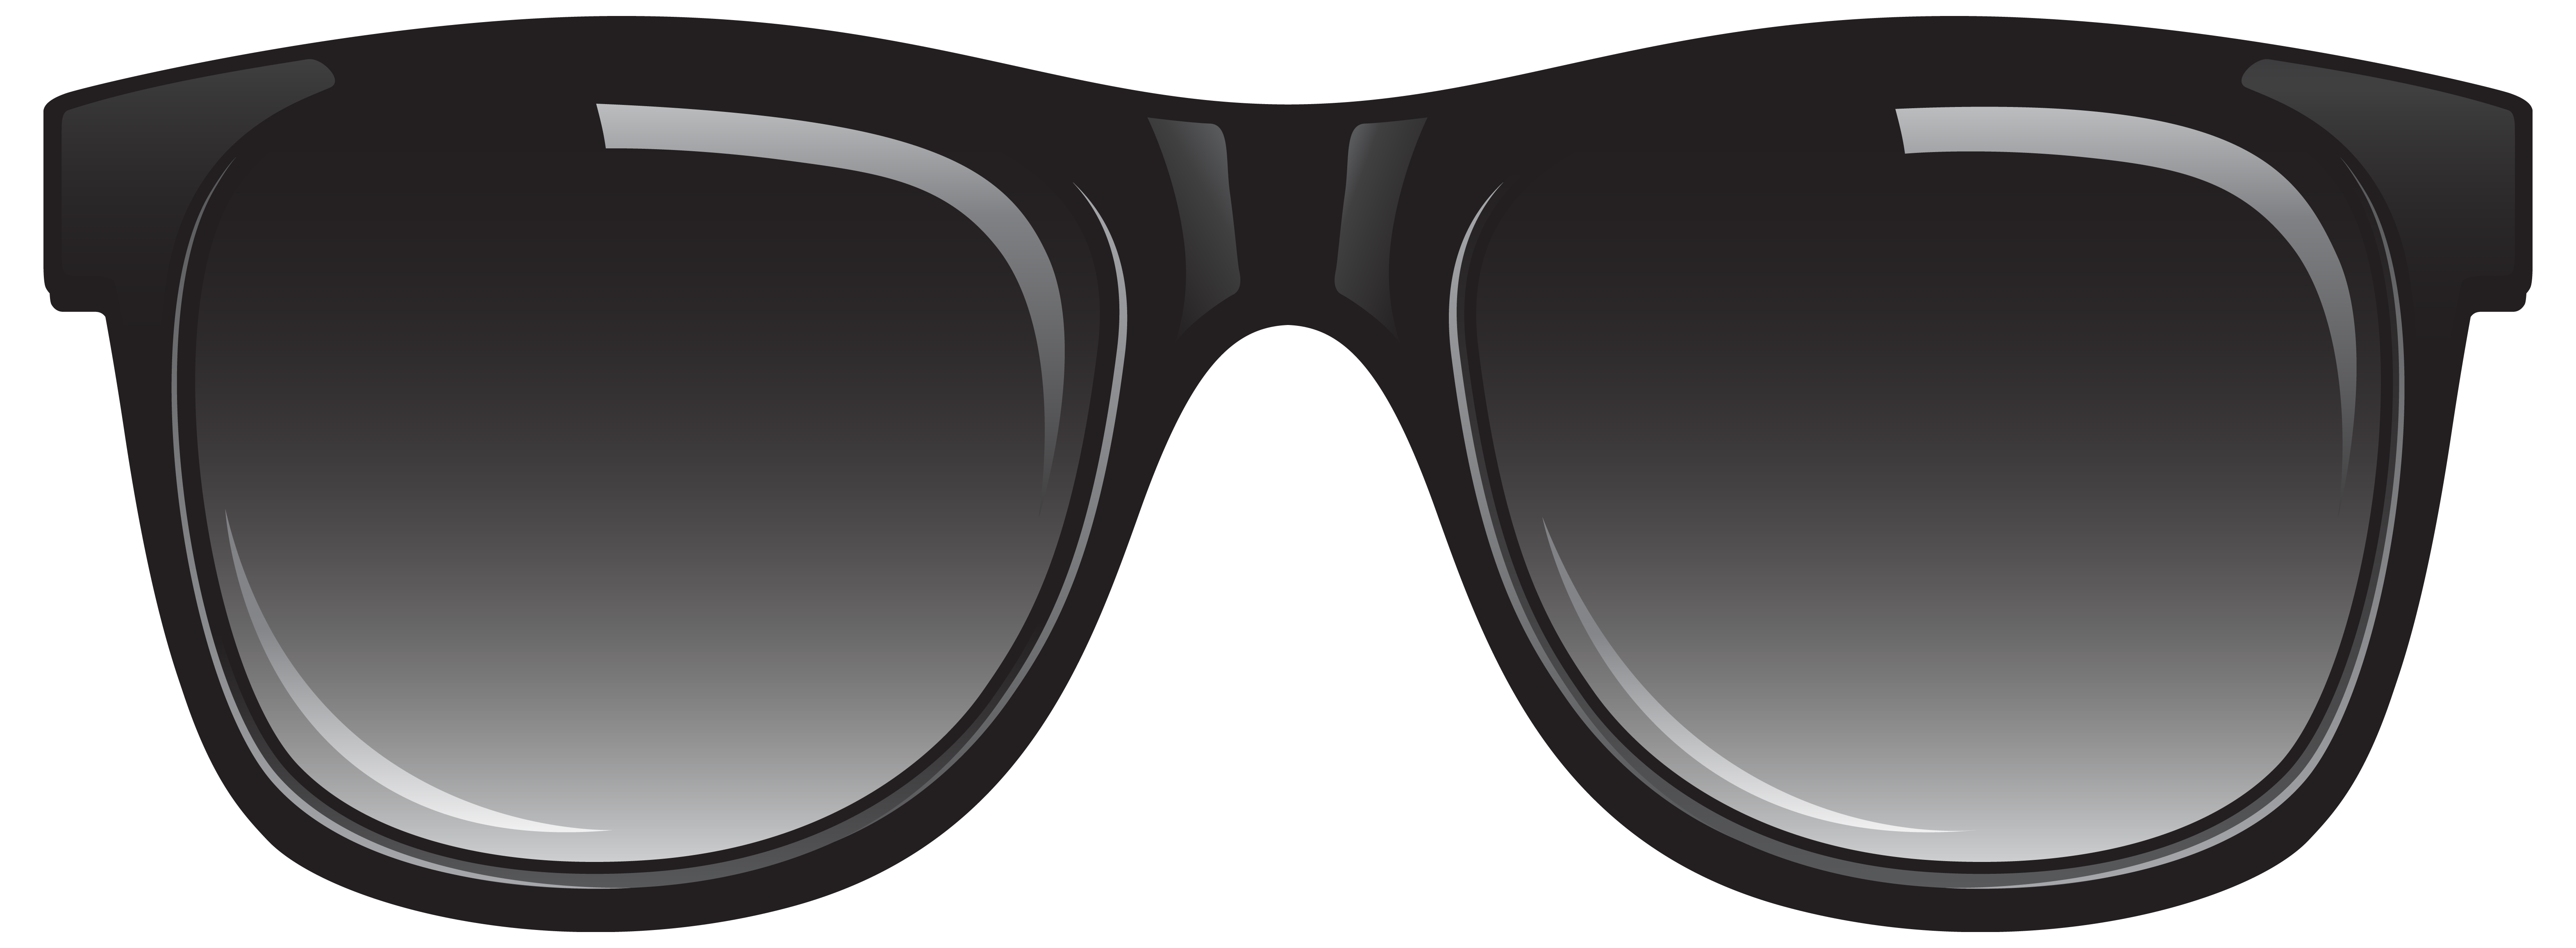 Clipart sunglasses animated.